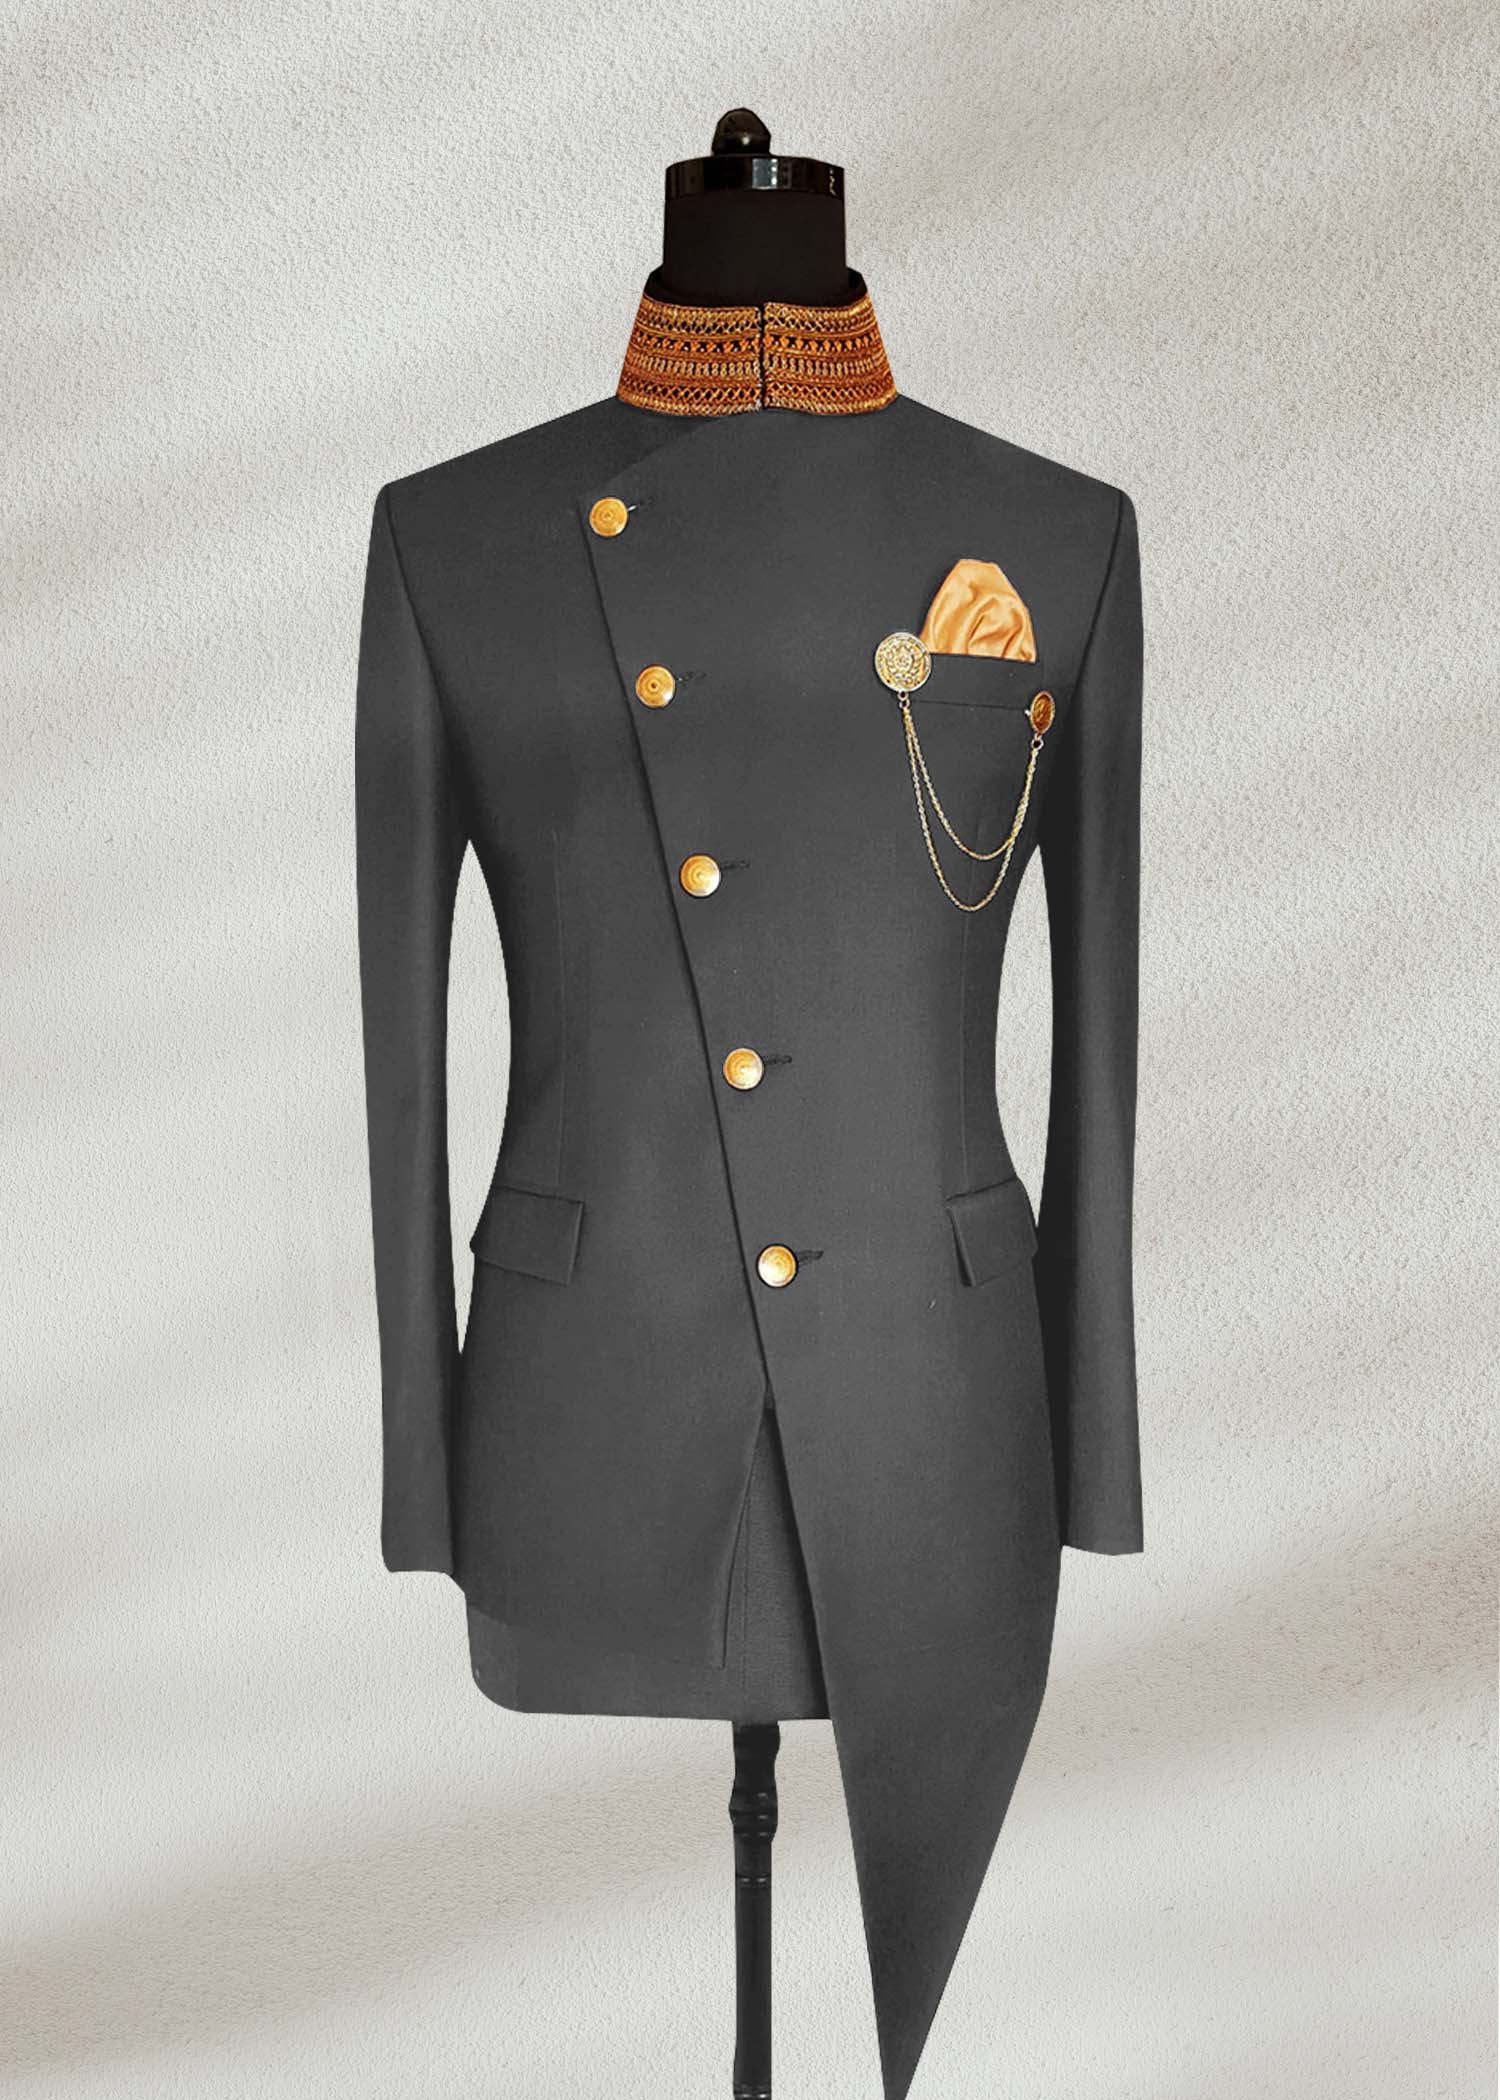 prince coat design 2019